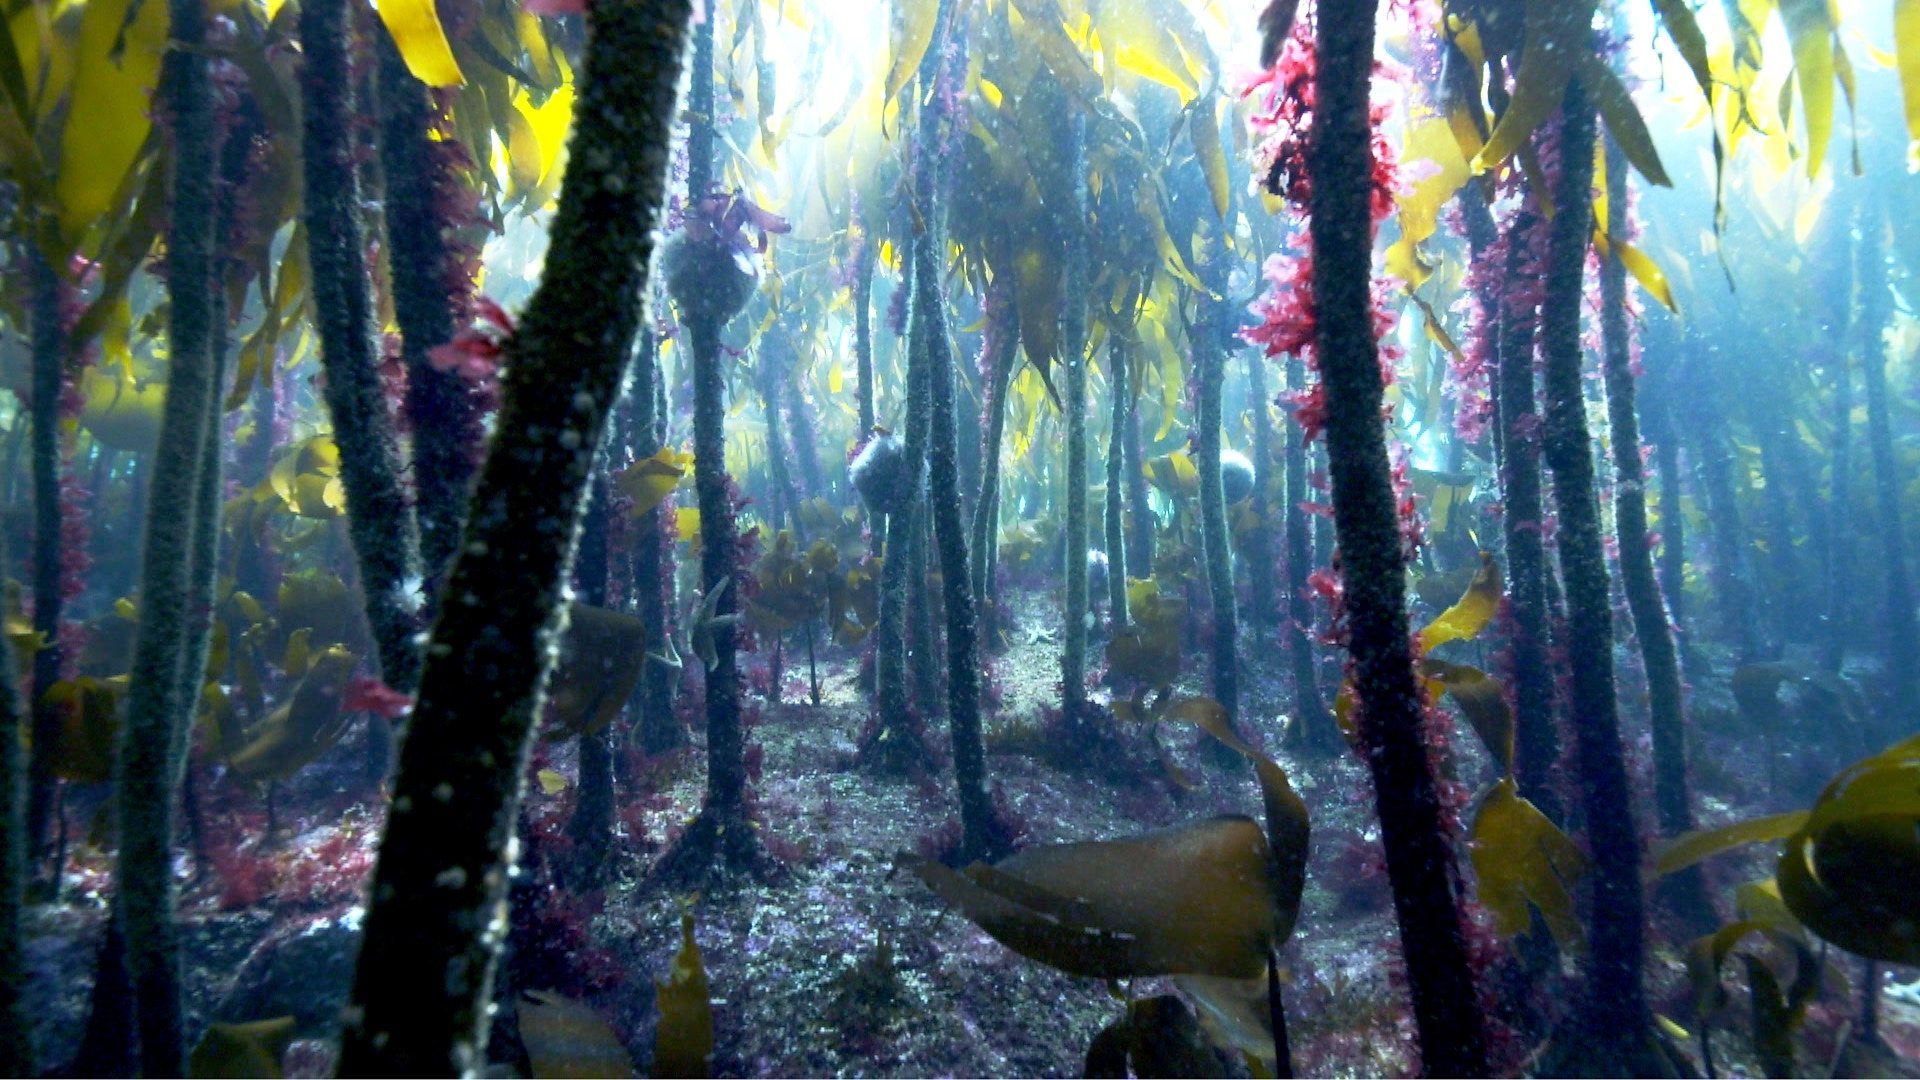 David Attenborough: Save Sussex's magical kelp forests